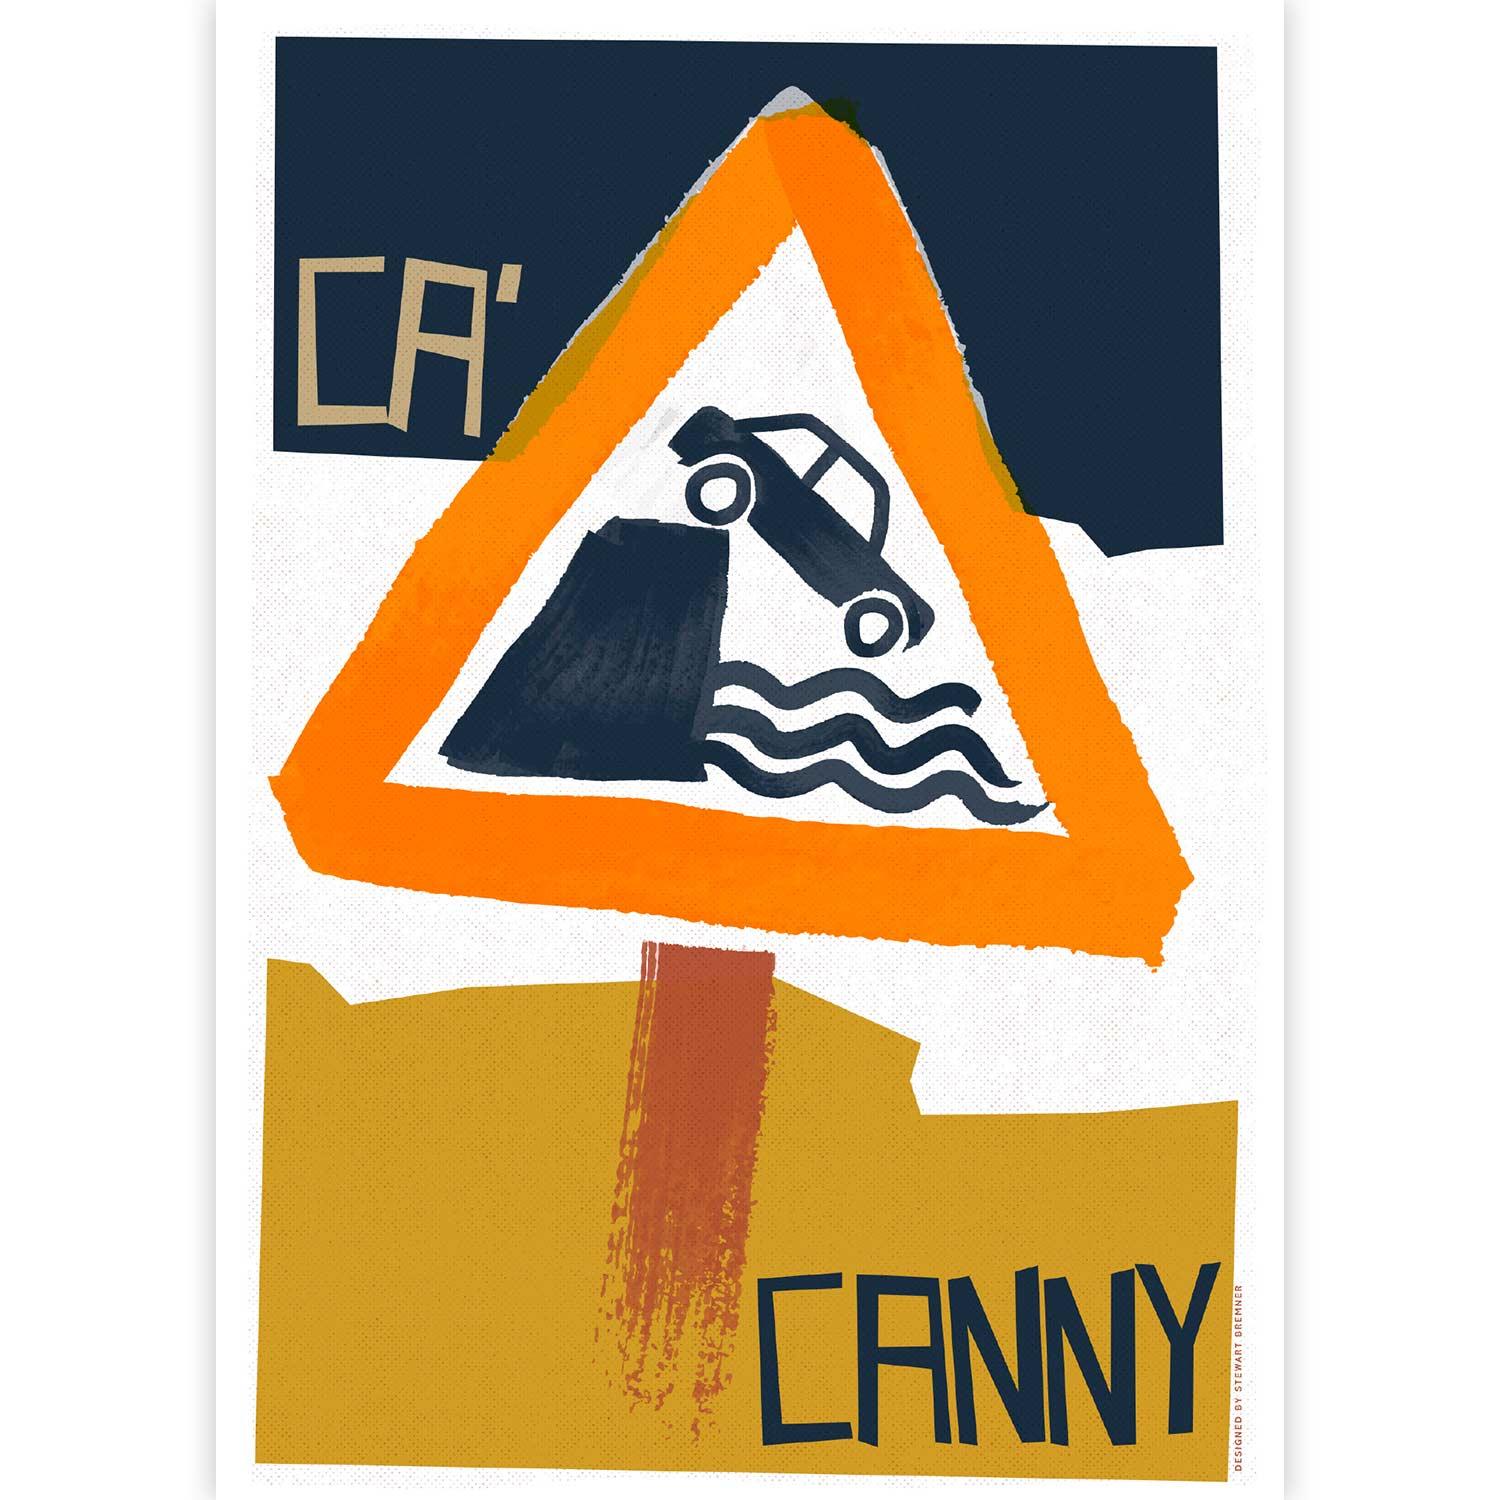 Ca' Canny by Stewart Bremner